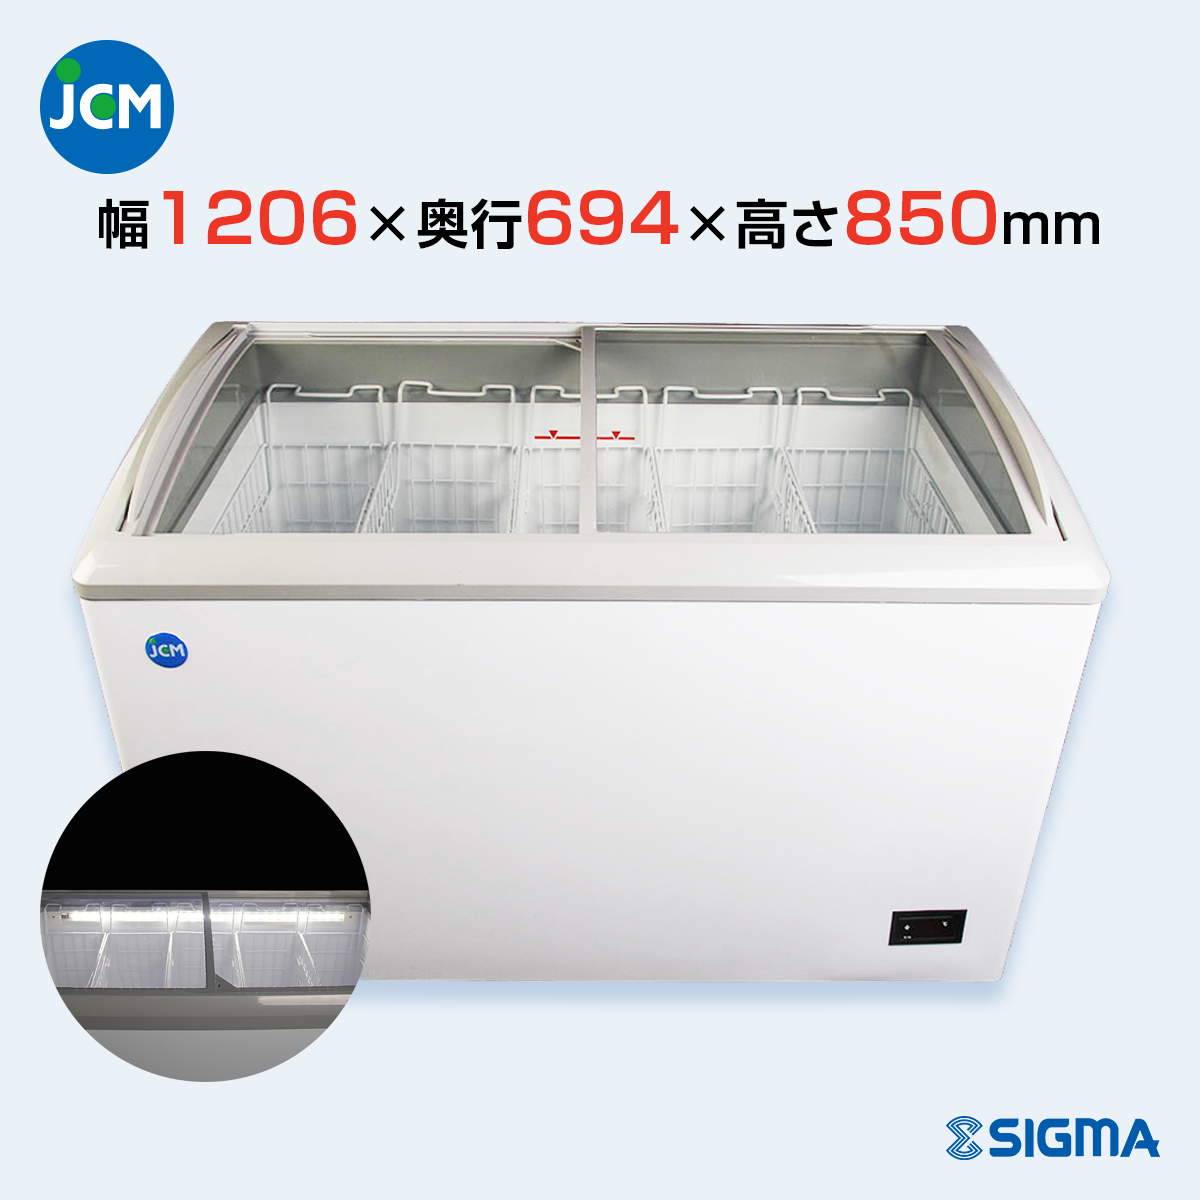 JCMCS-240L 冷凍ショーケース 庫内LED付タイプ／幅1206×奥行694×高さ850mm